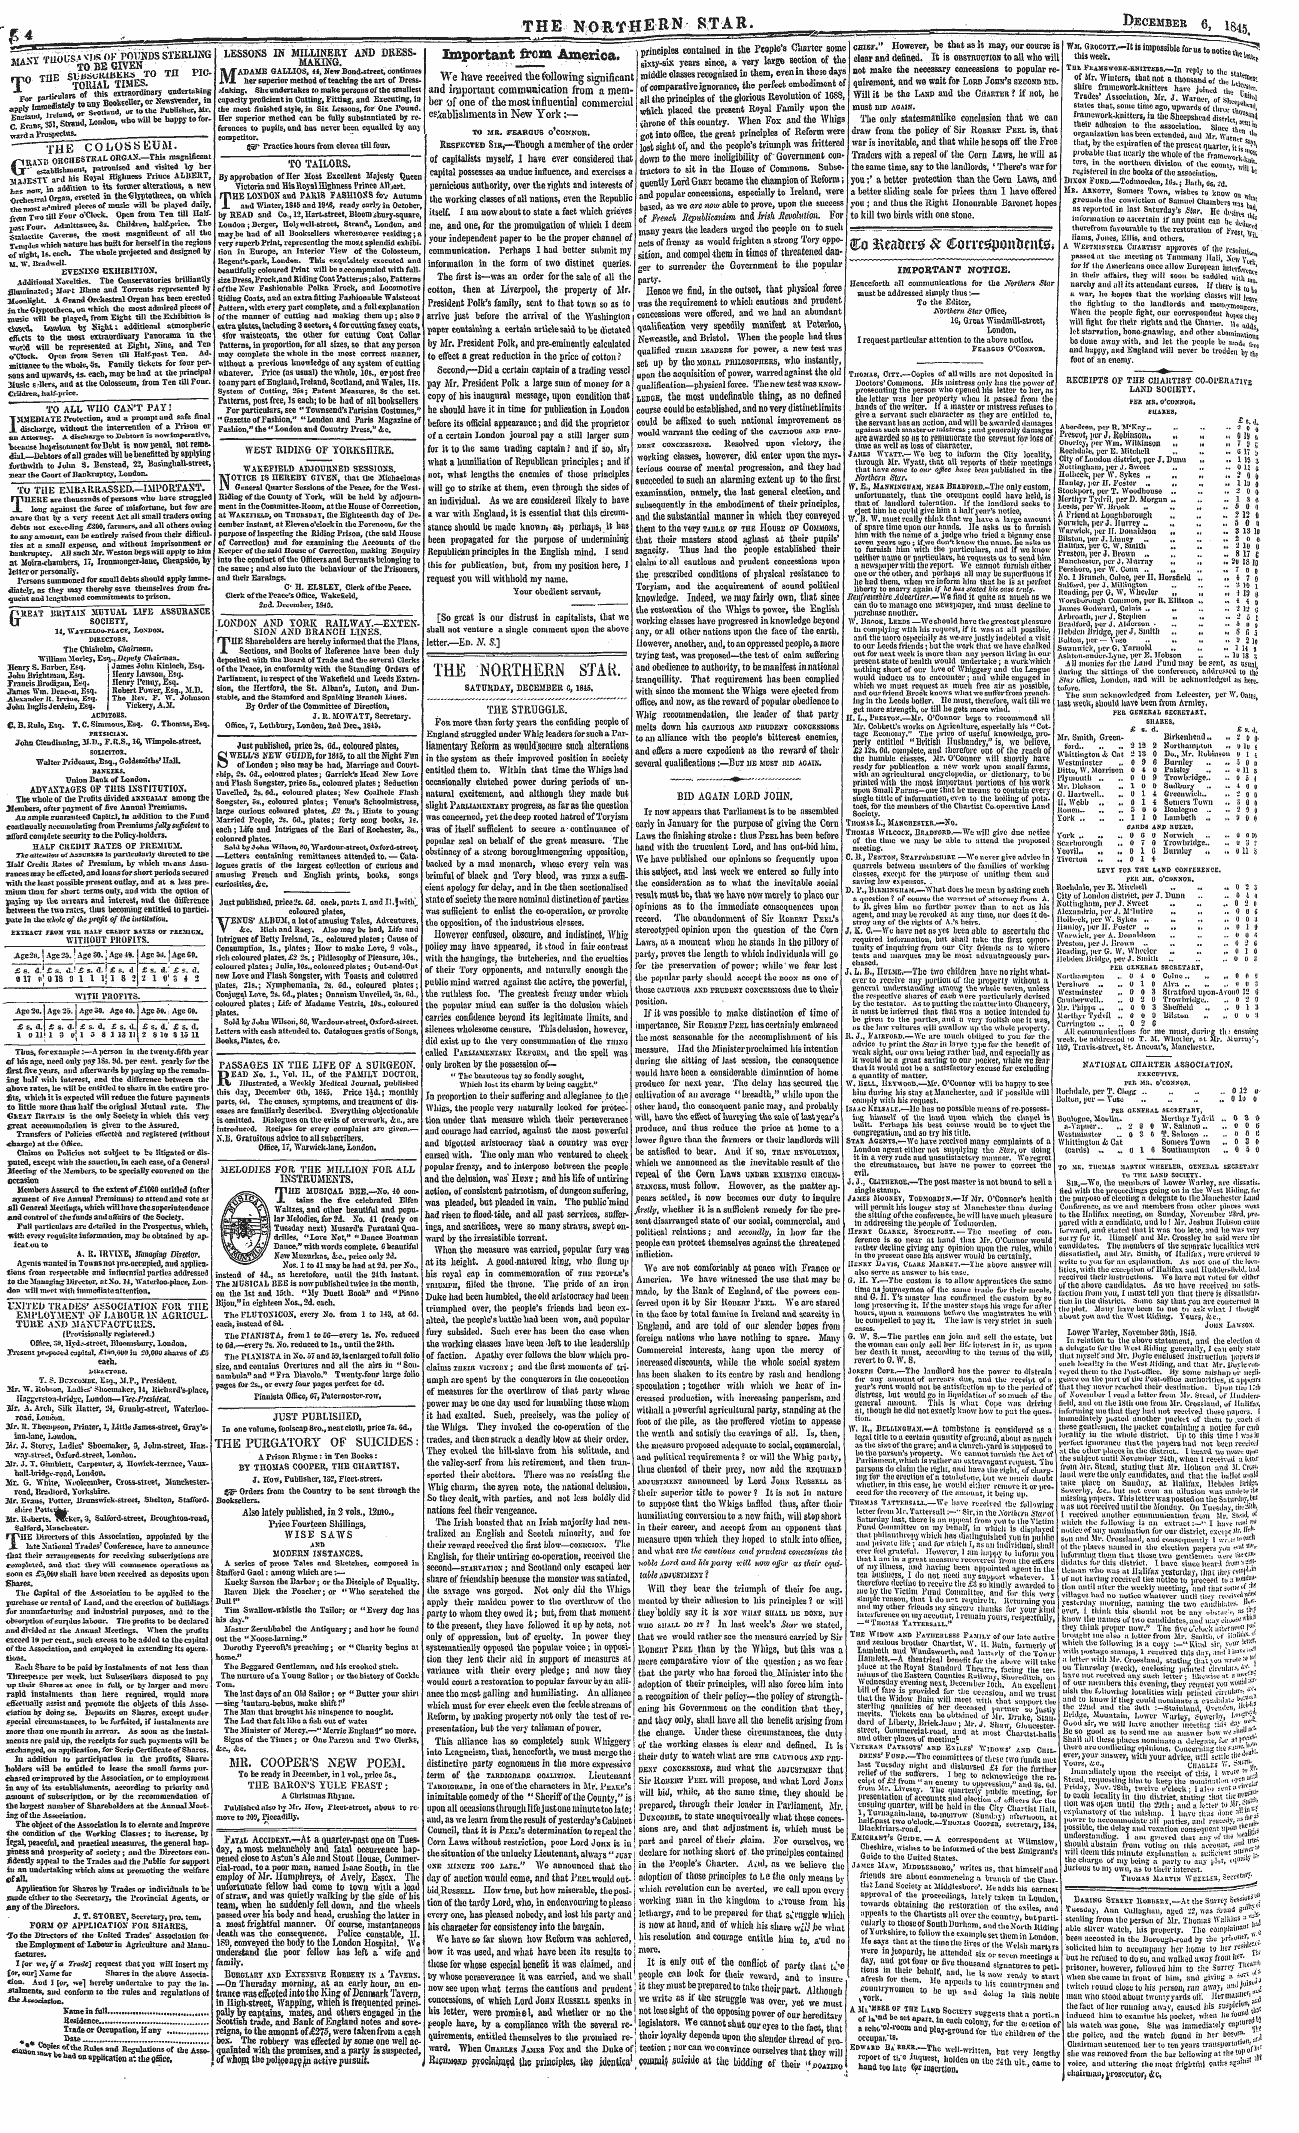 Northern Star (1837-1852): jS F Y, 3rd edition - Ad00414